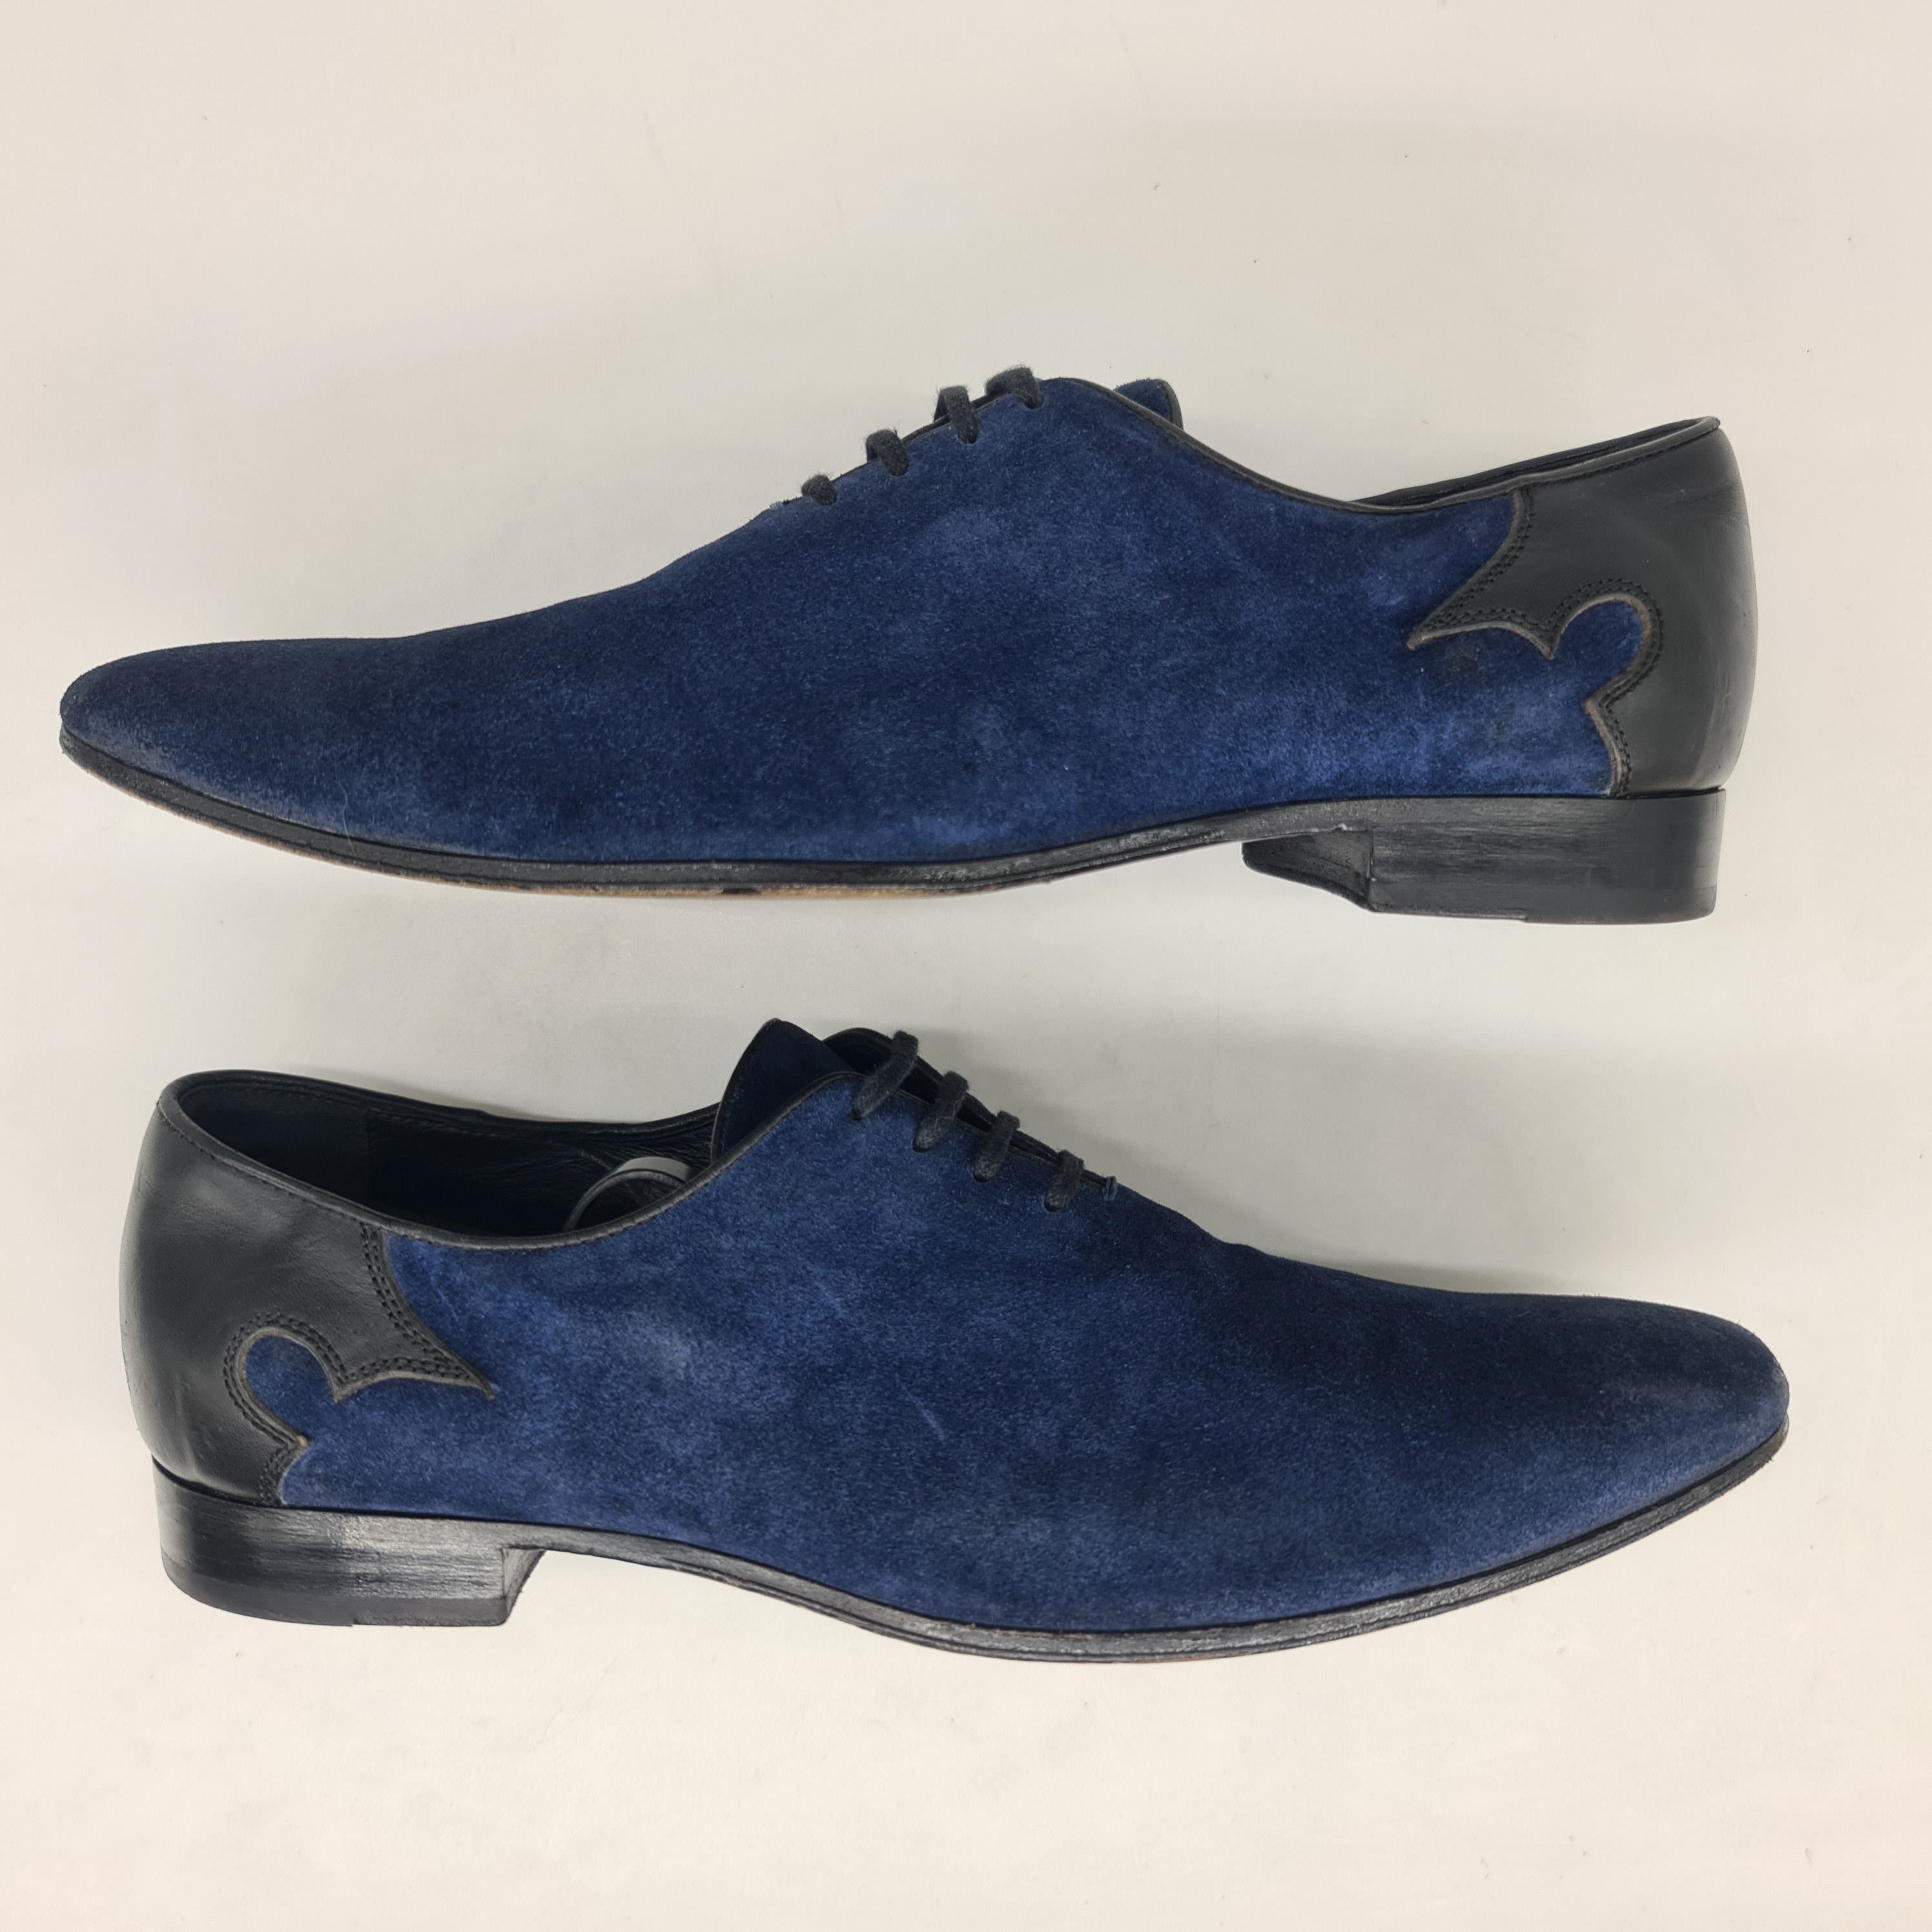 Haider Ackermann - SS16 Runway Blue Suede Oxford Shoes - 4